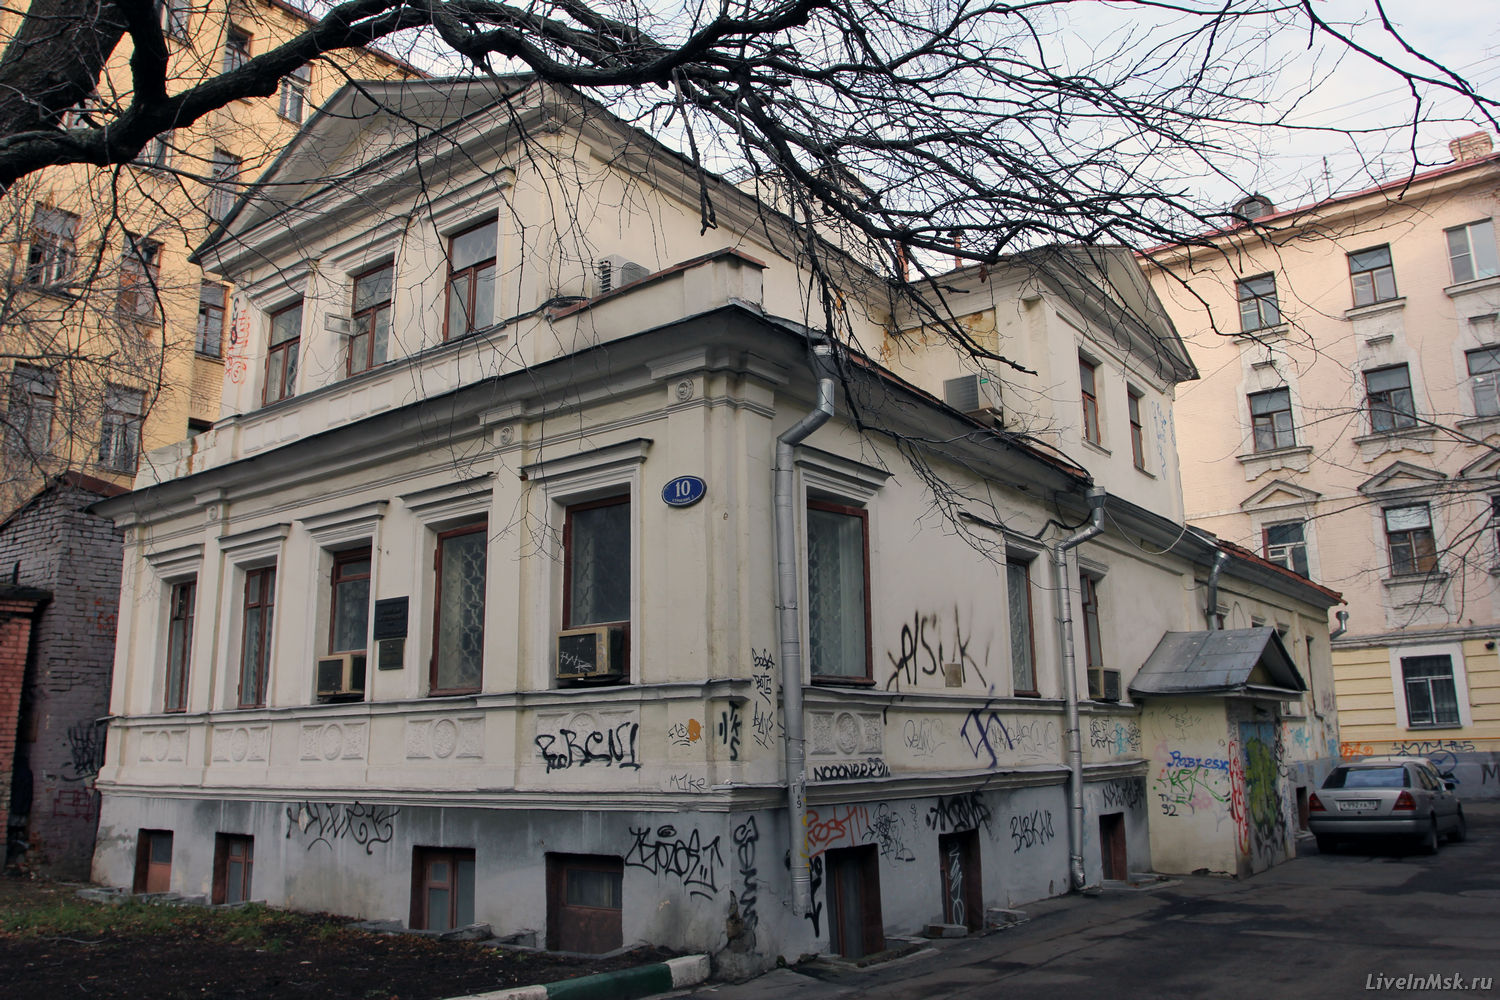 Дом Остроумова, фото 2014 года